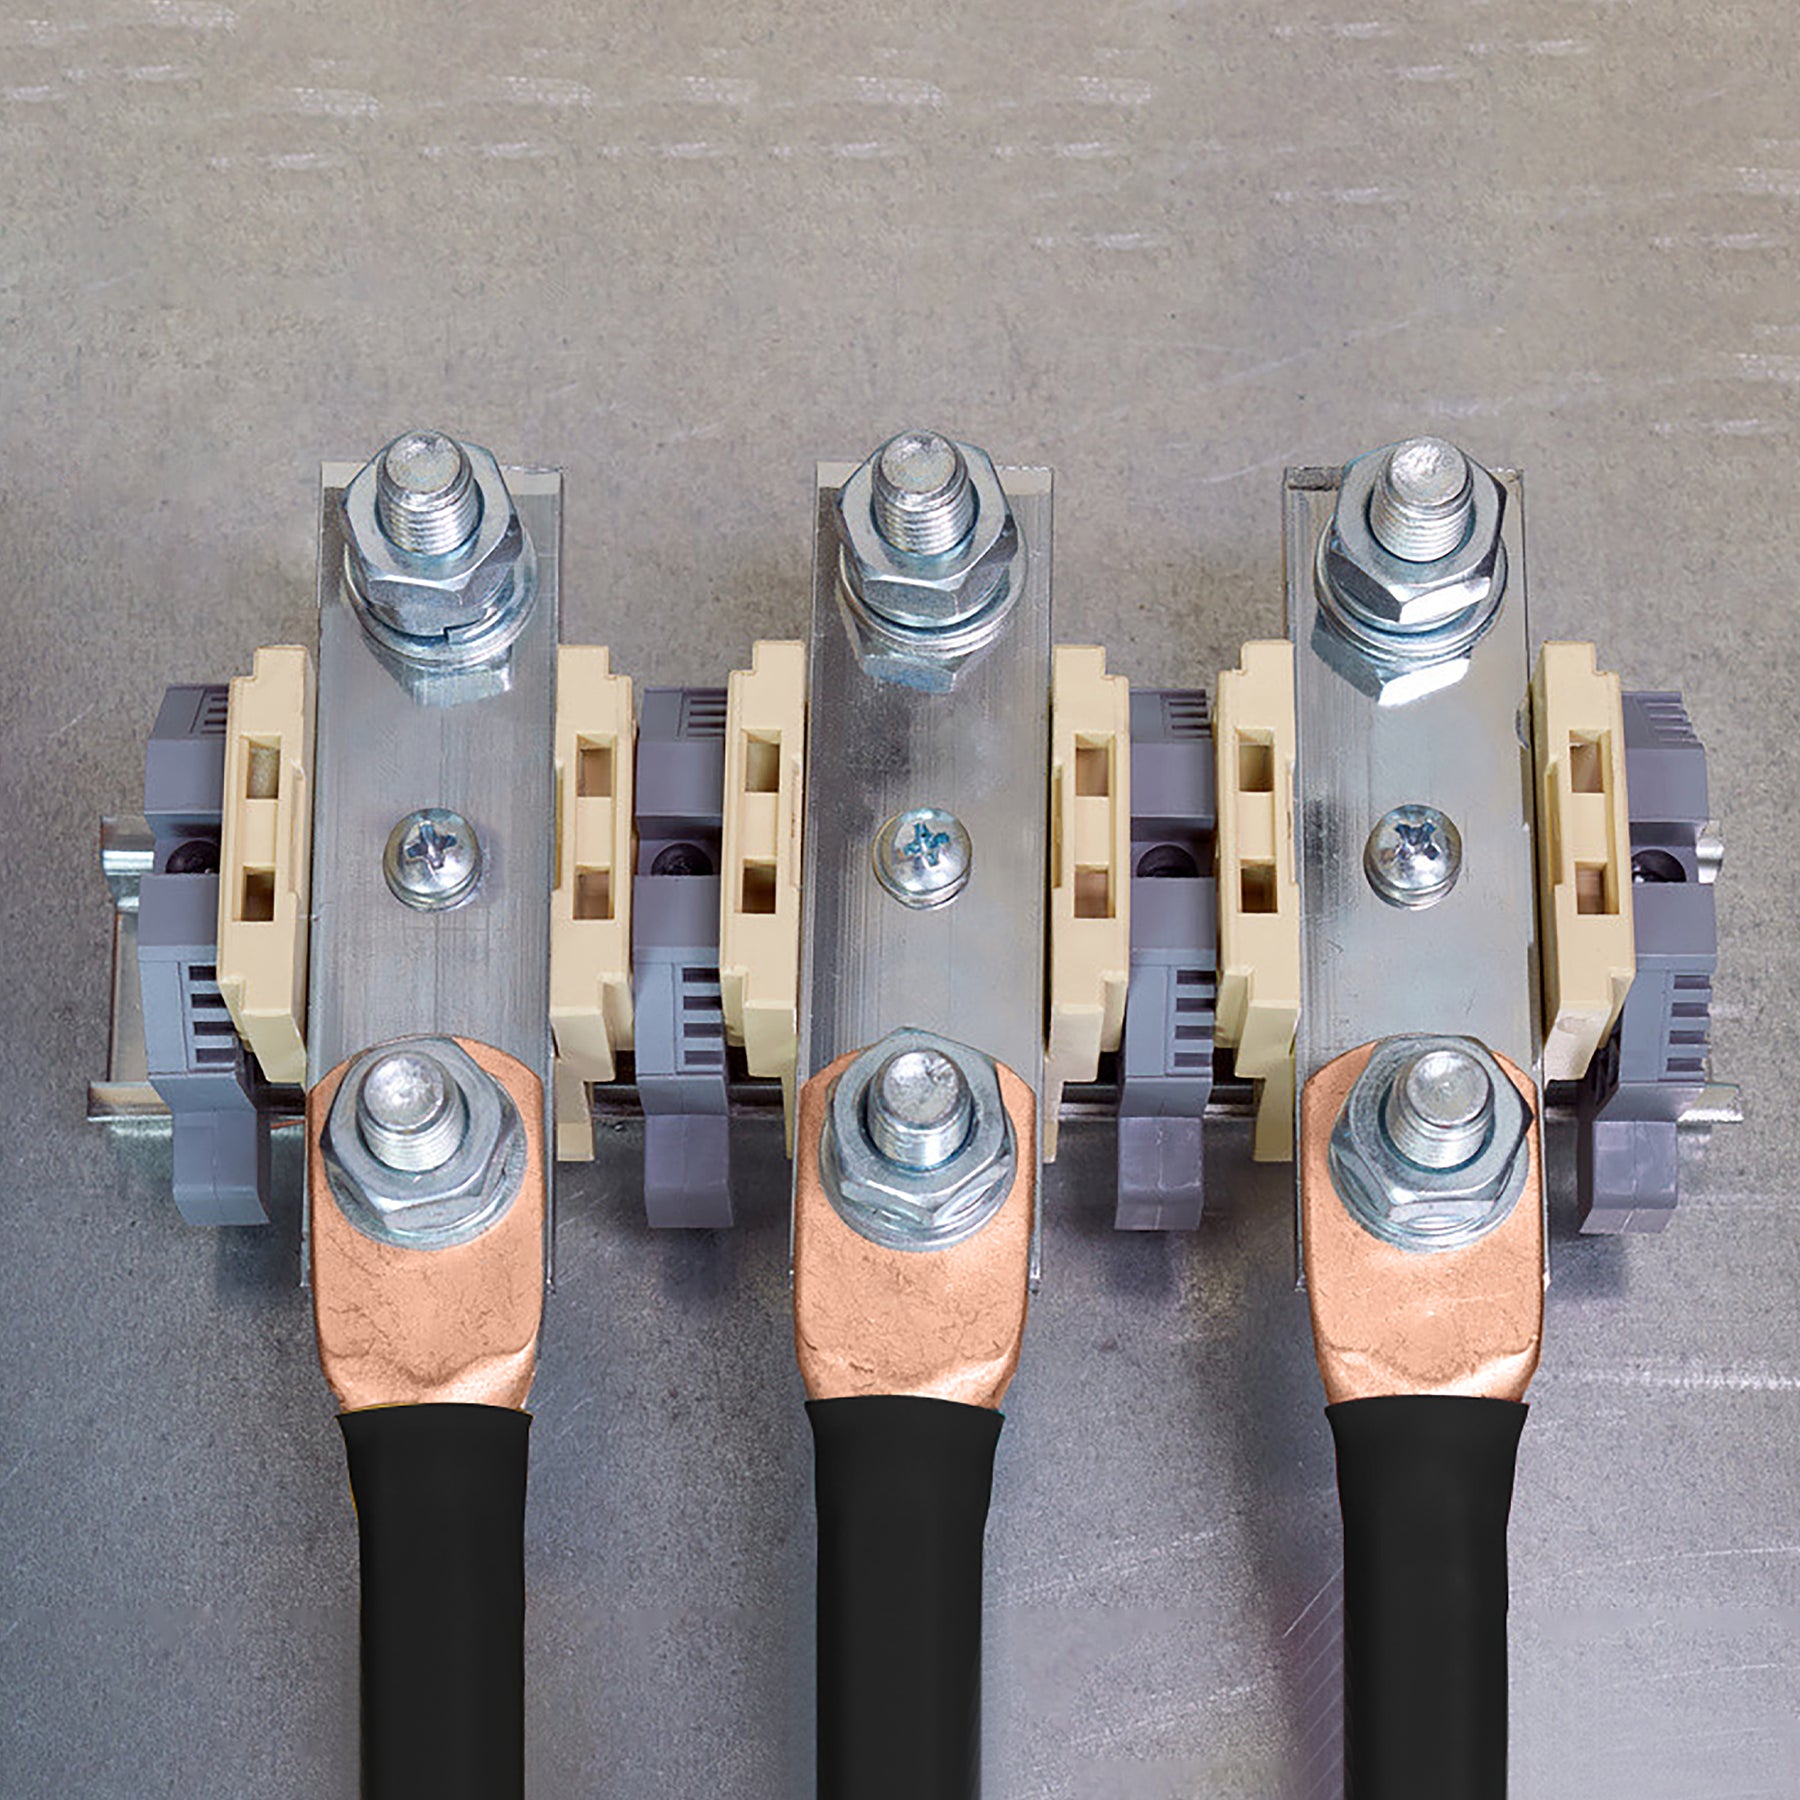 80PCS Copper Wire Lugs-Bare Copper Crimp Connectors  AWG 8 6 4 2